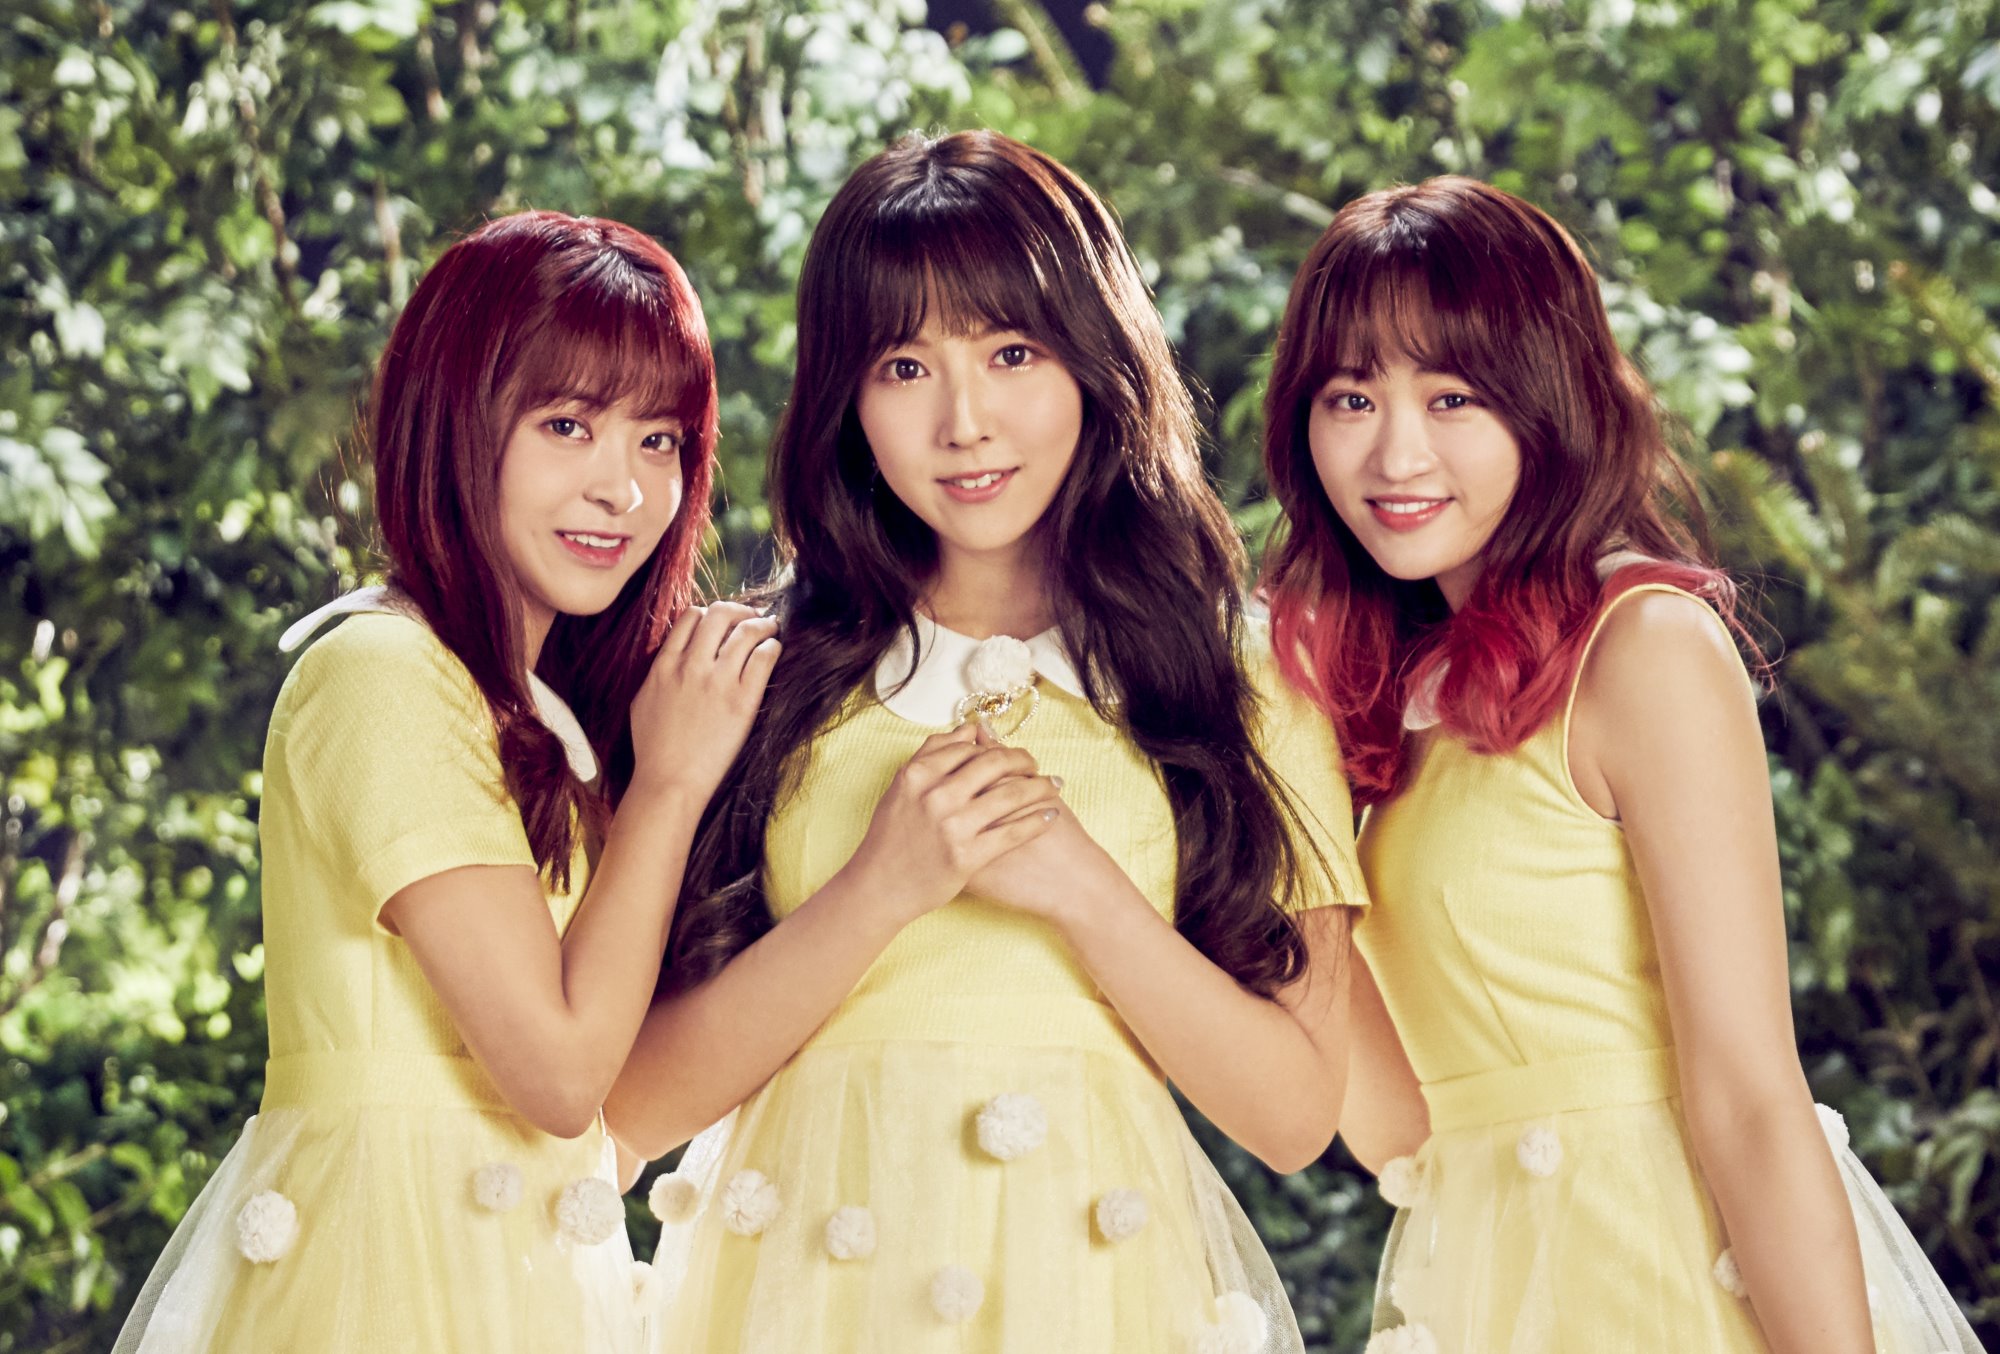 Honey Popcorn (허니팝콘) is a 3-membered girl grop consisting of 3 Japanese gir...